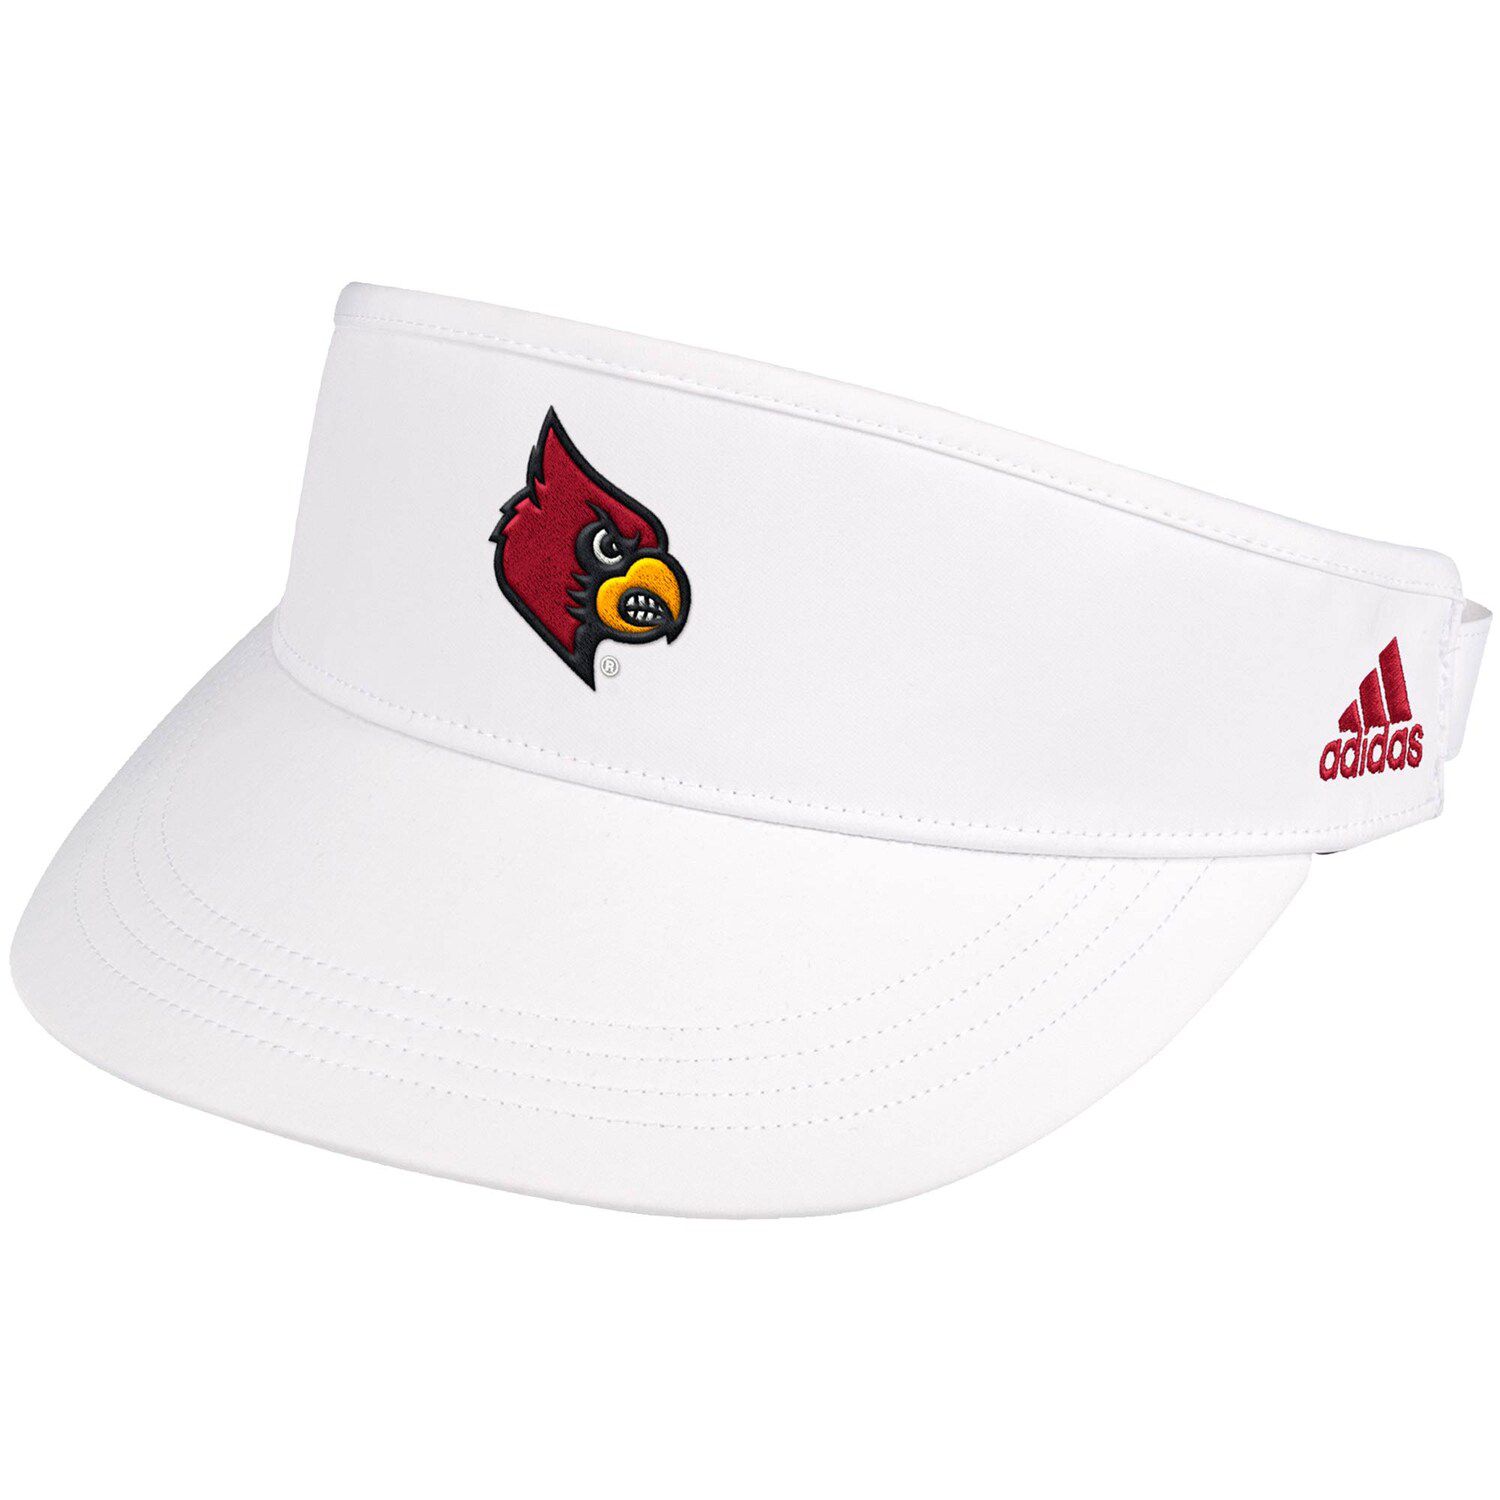 Men's Adidas Black Louisville Cardinals Sideline Coaches AEROREADY Flex Hat Size: Small/Medium